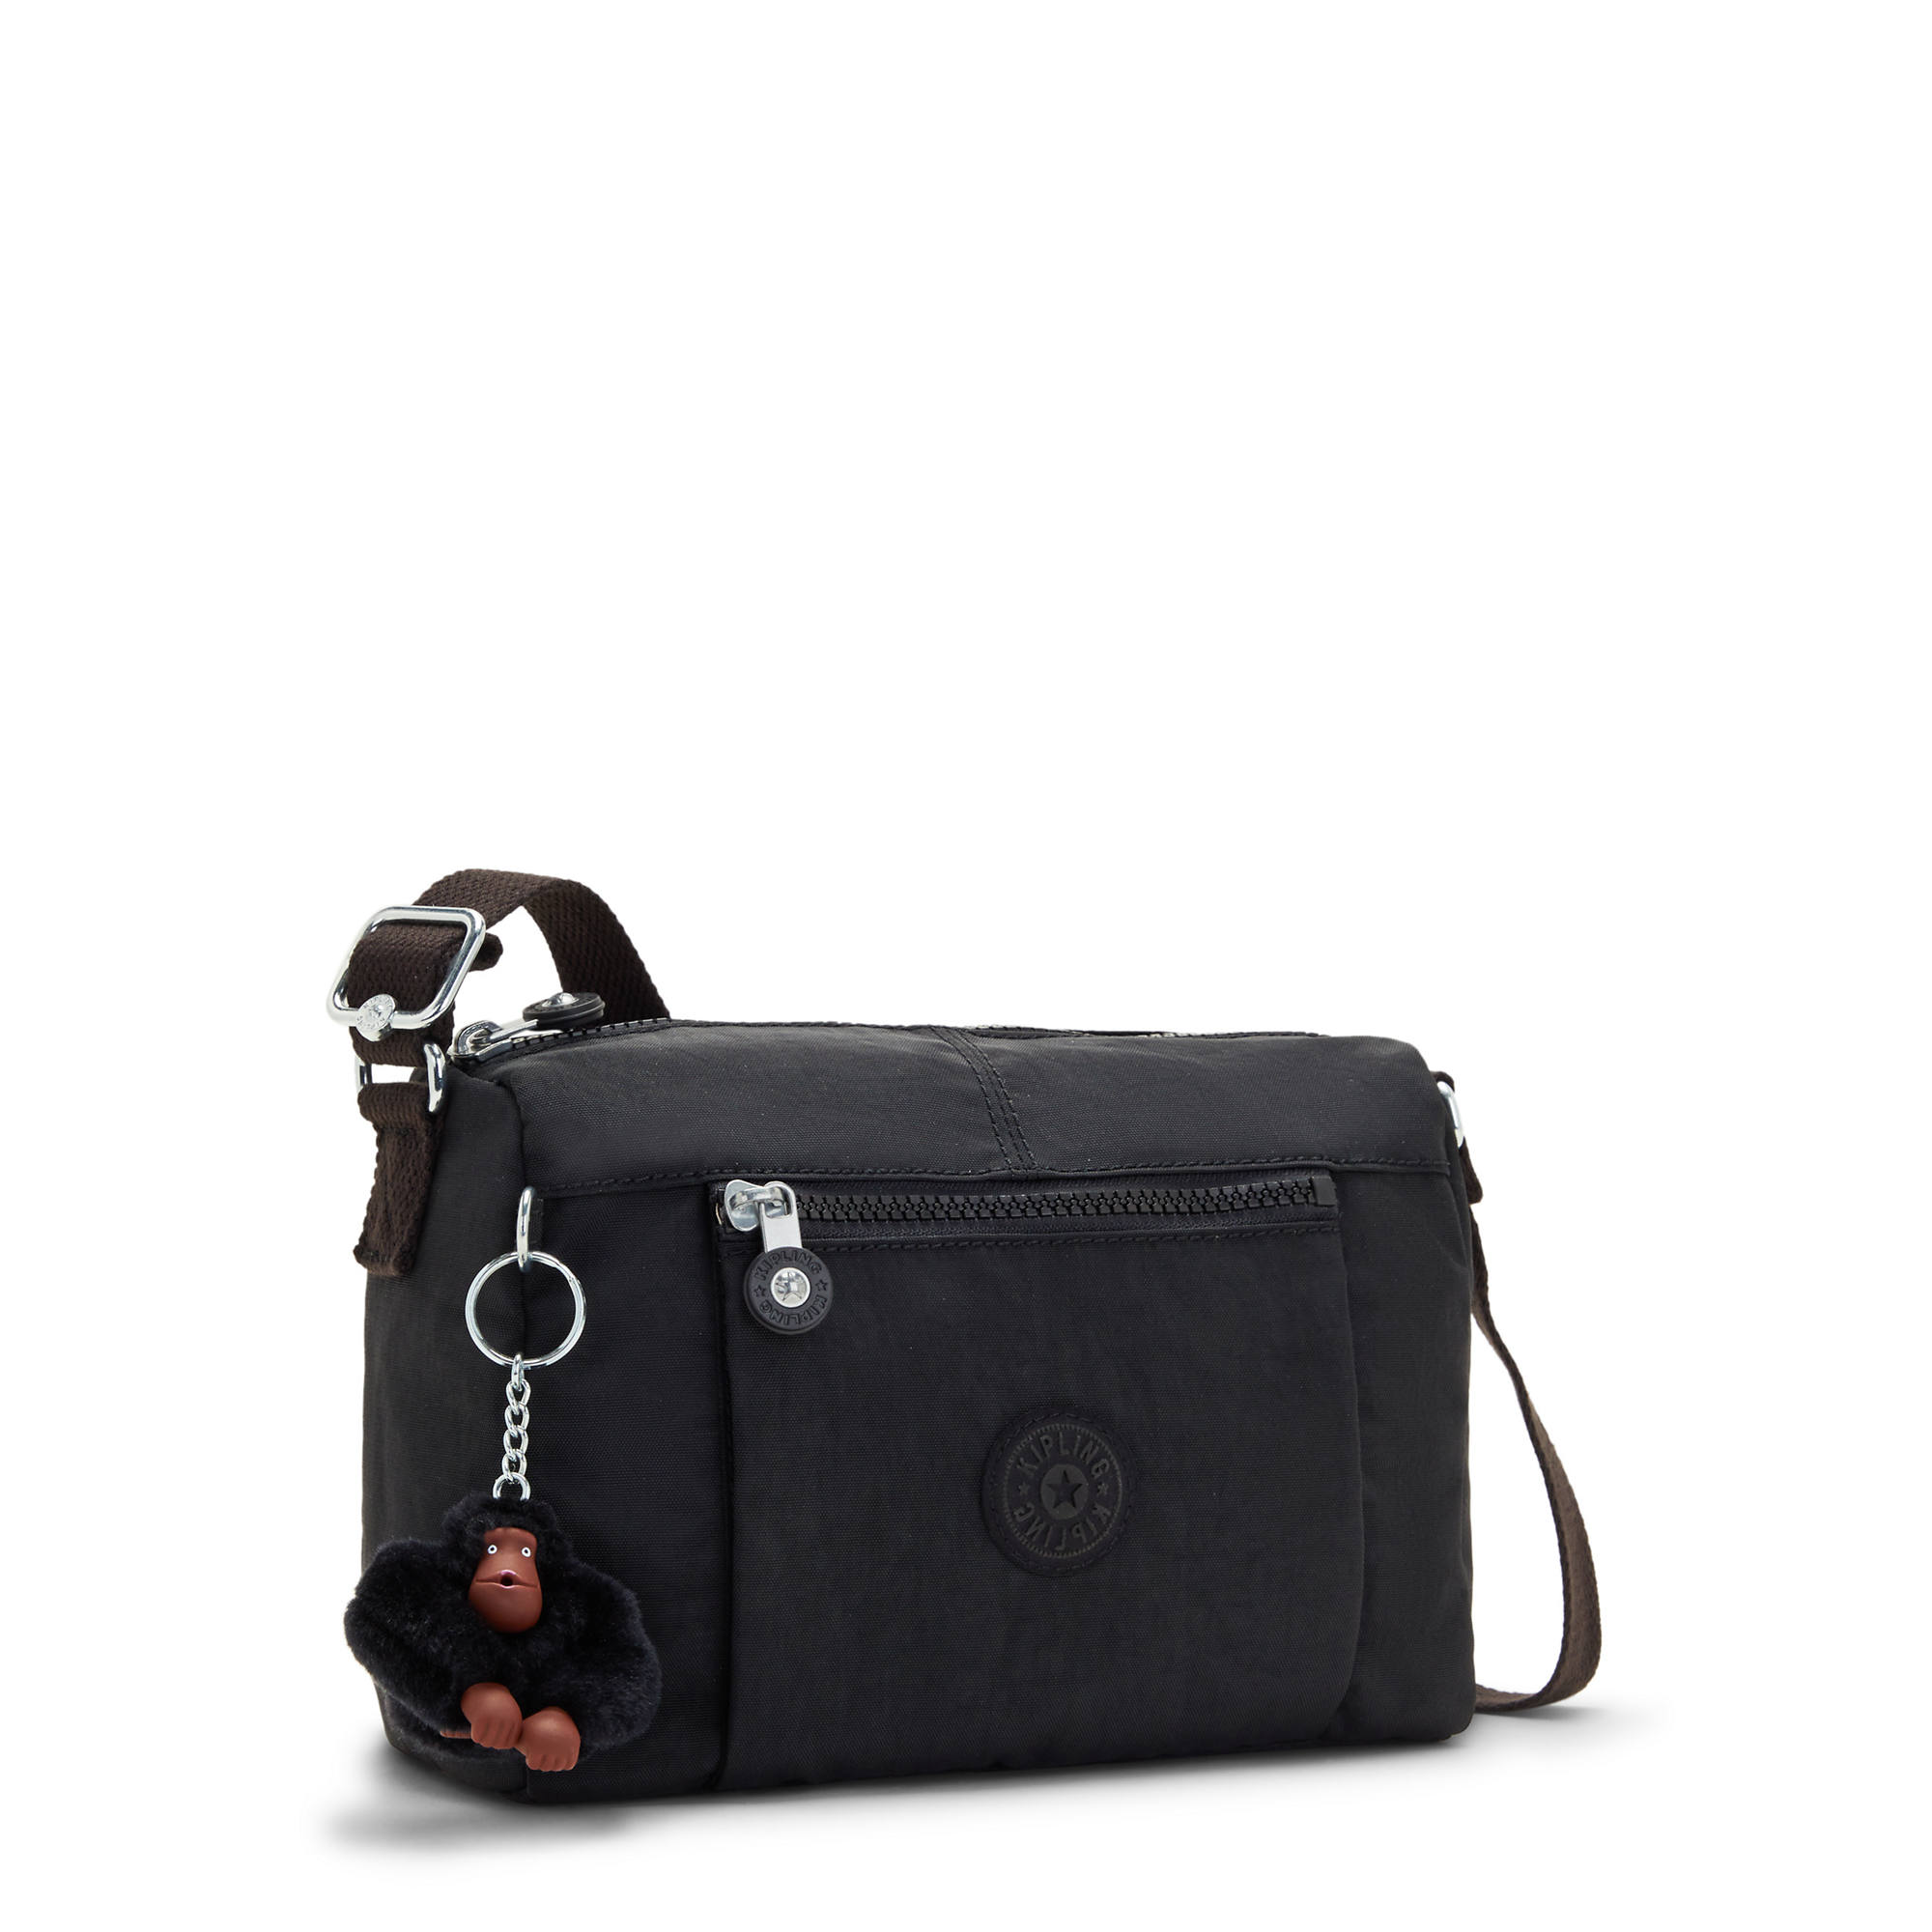 Kipling Women's Wes Crossbody Handbag with Adjustable Strap | eBay